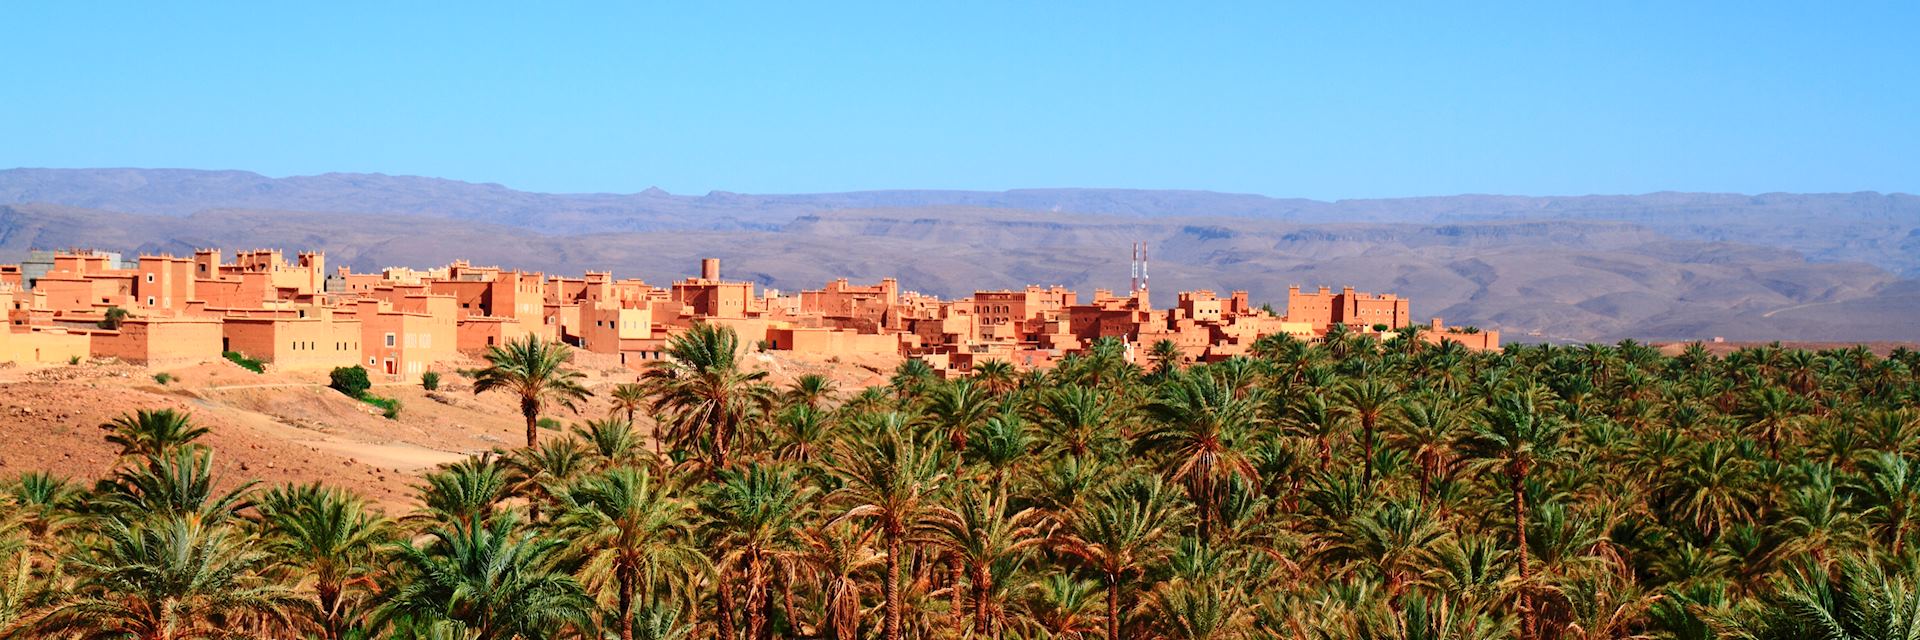 Draa Valley, Morocco